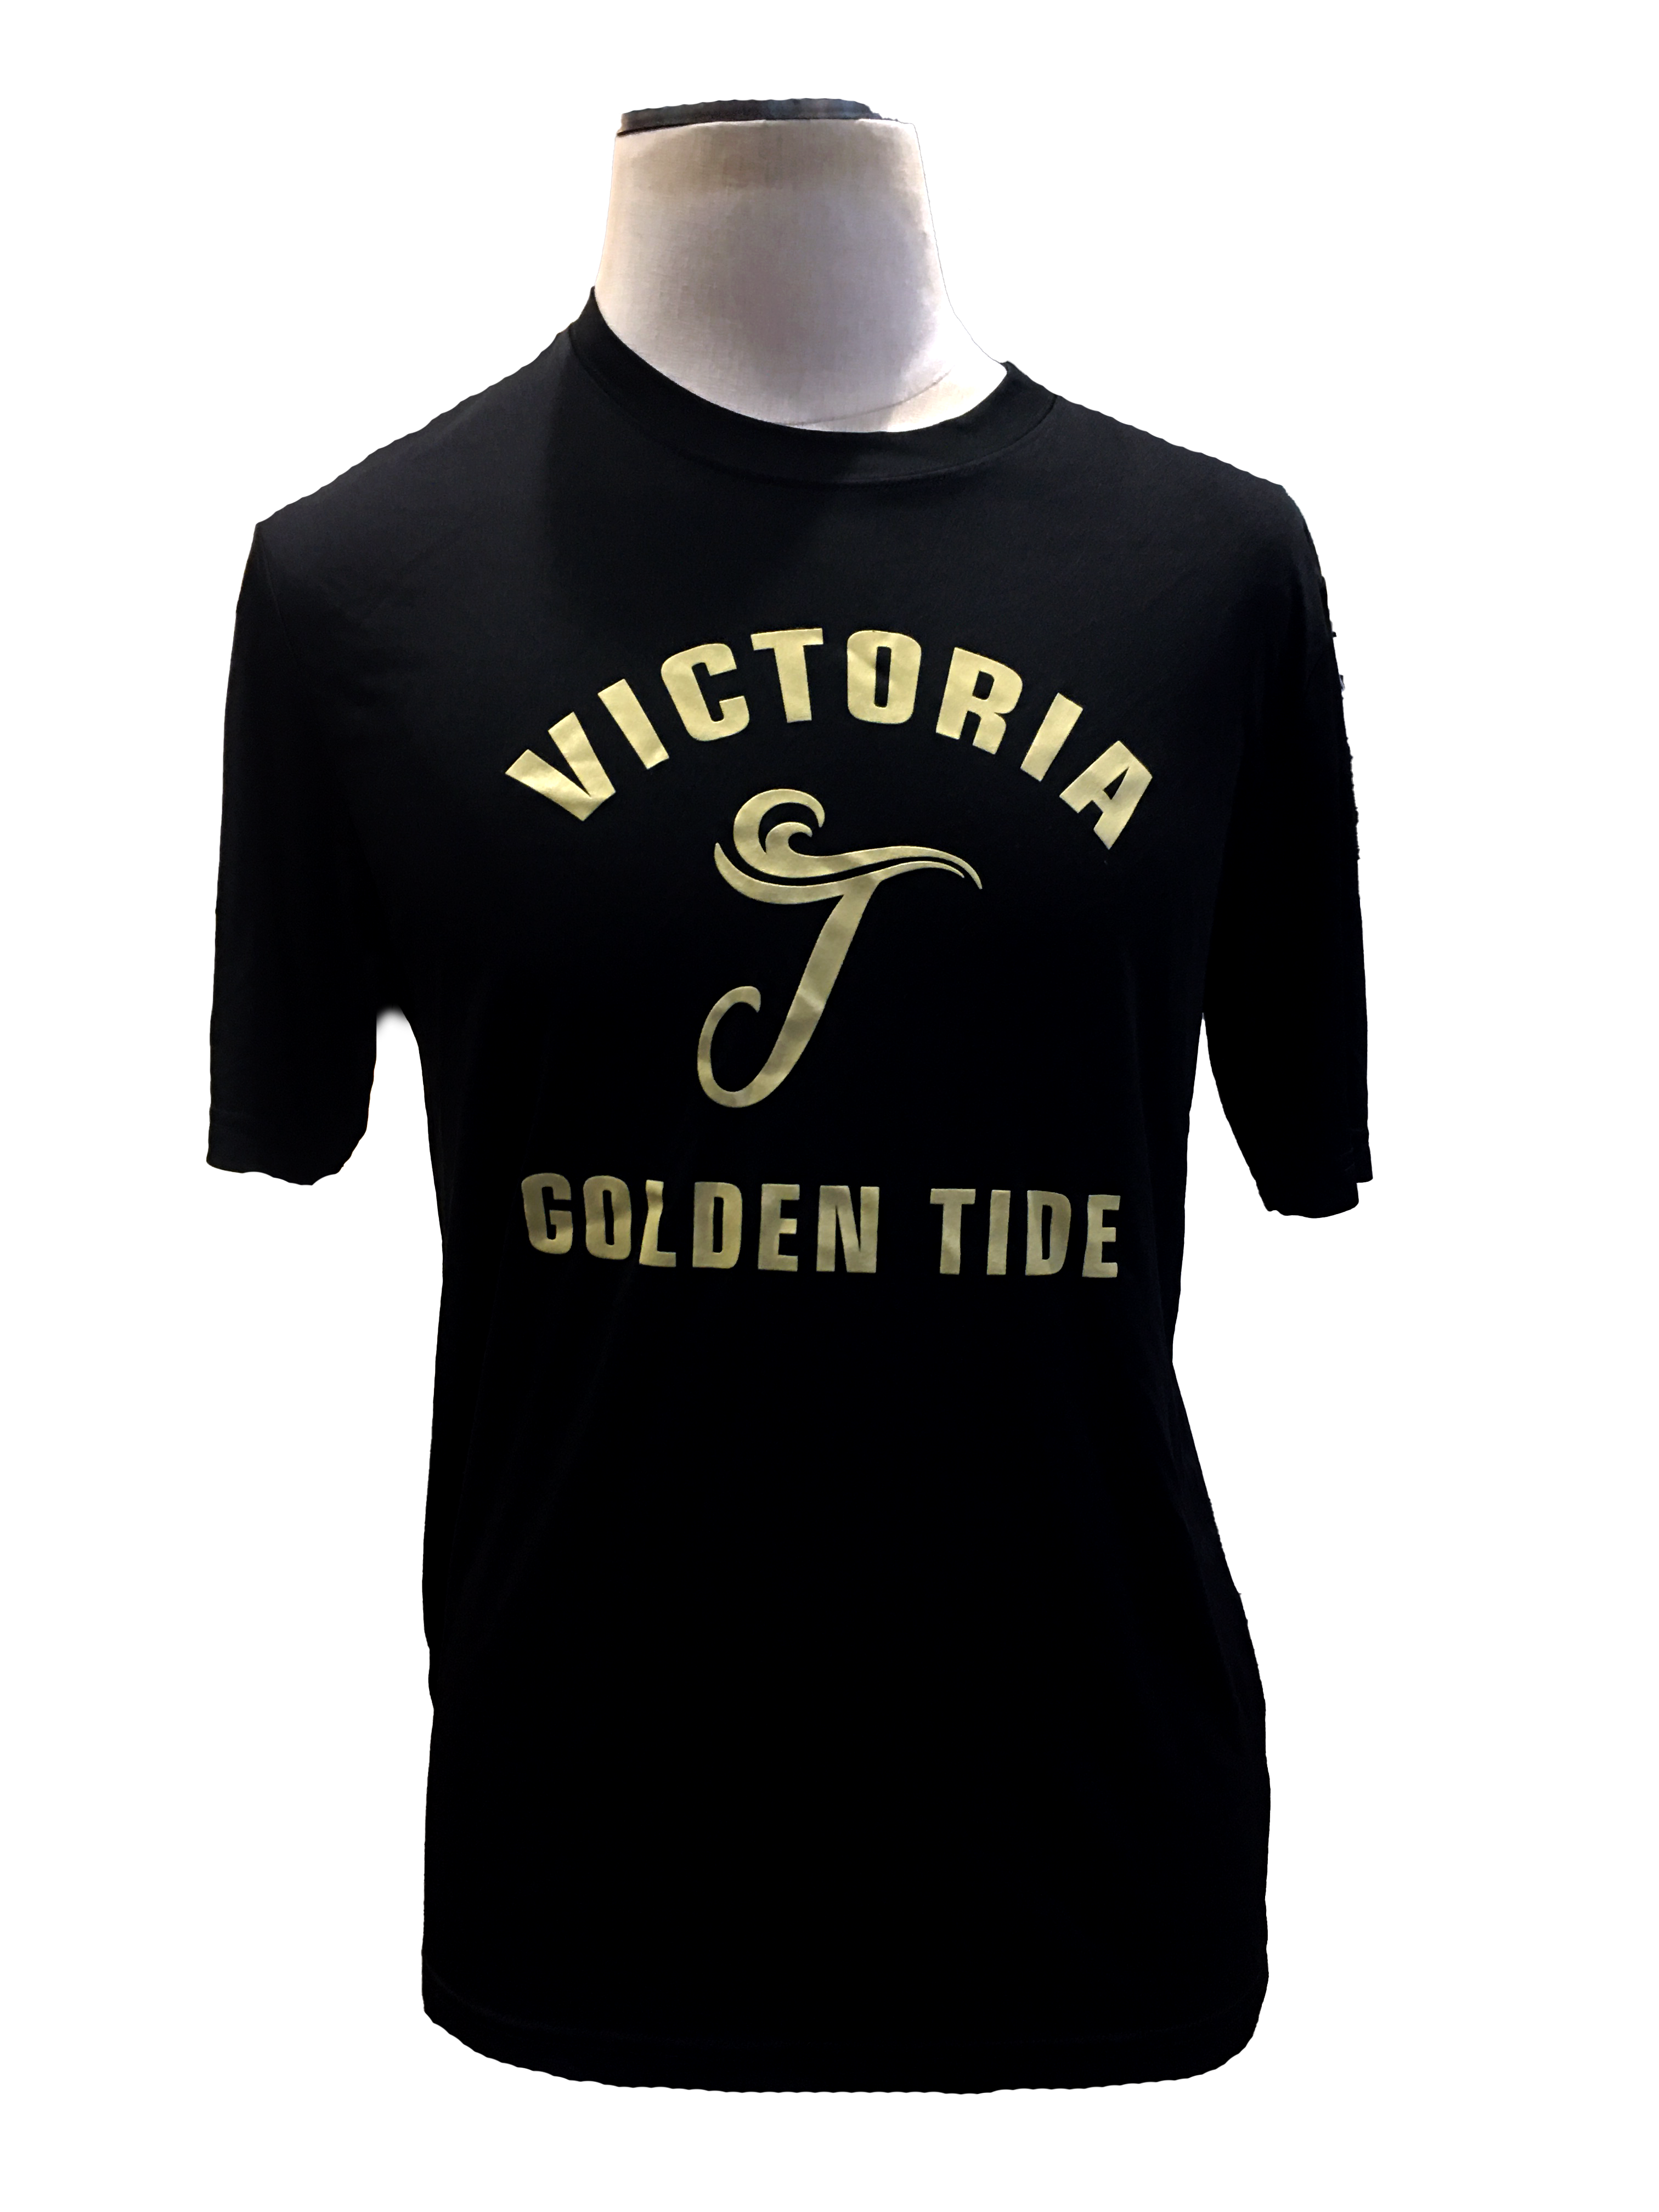 Victoria Golden Tide Black Unisex DRI-FIT T-Shirt